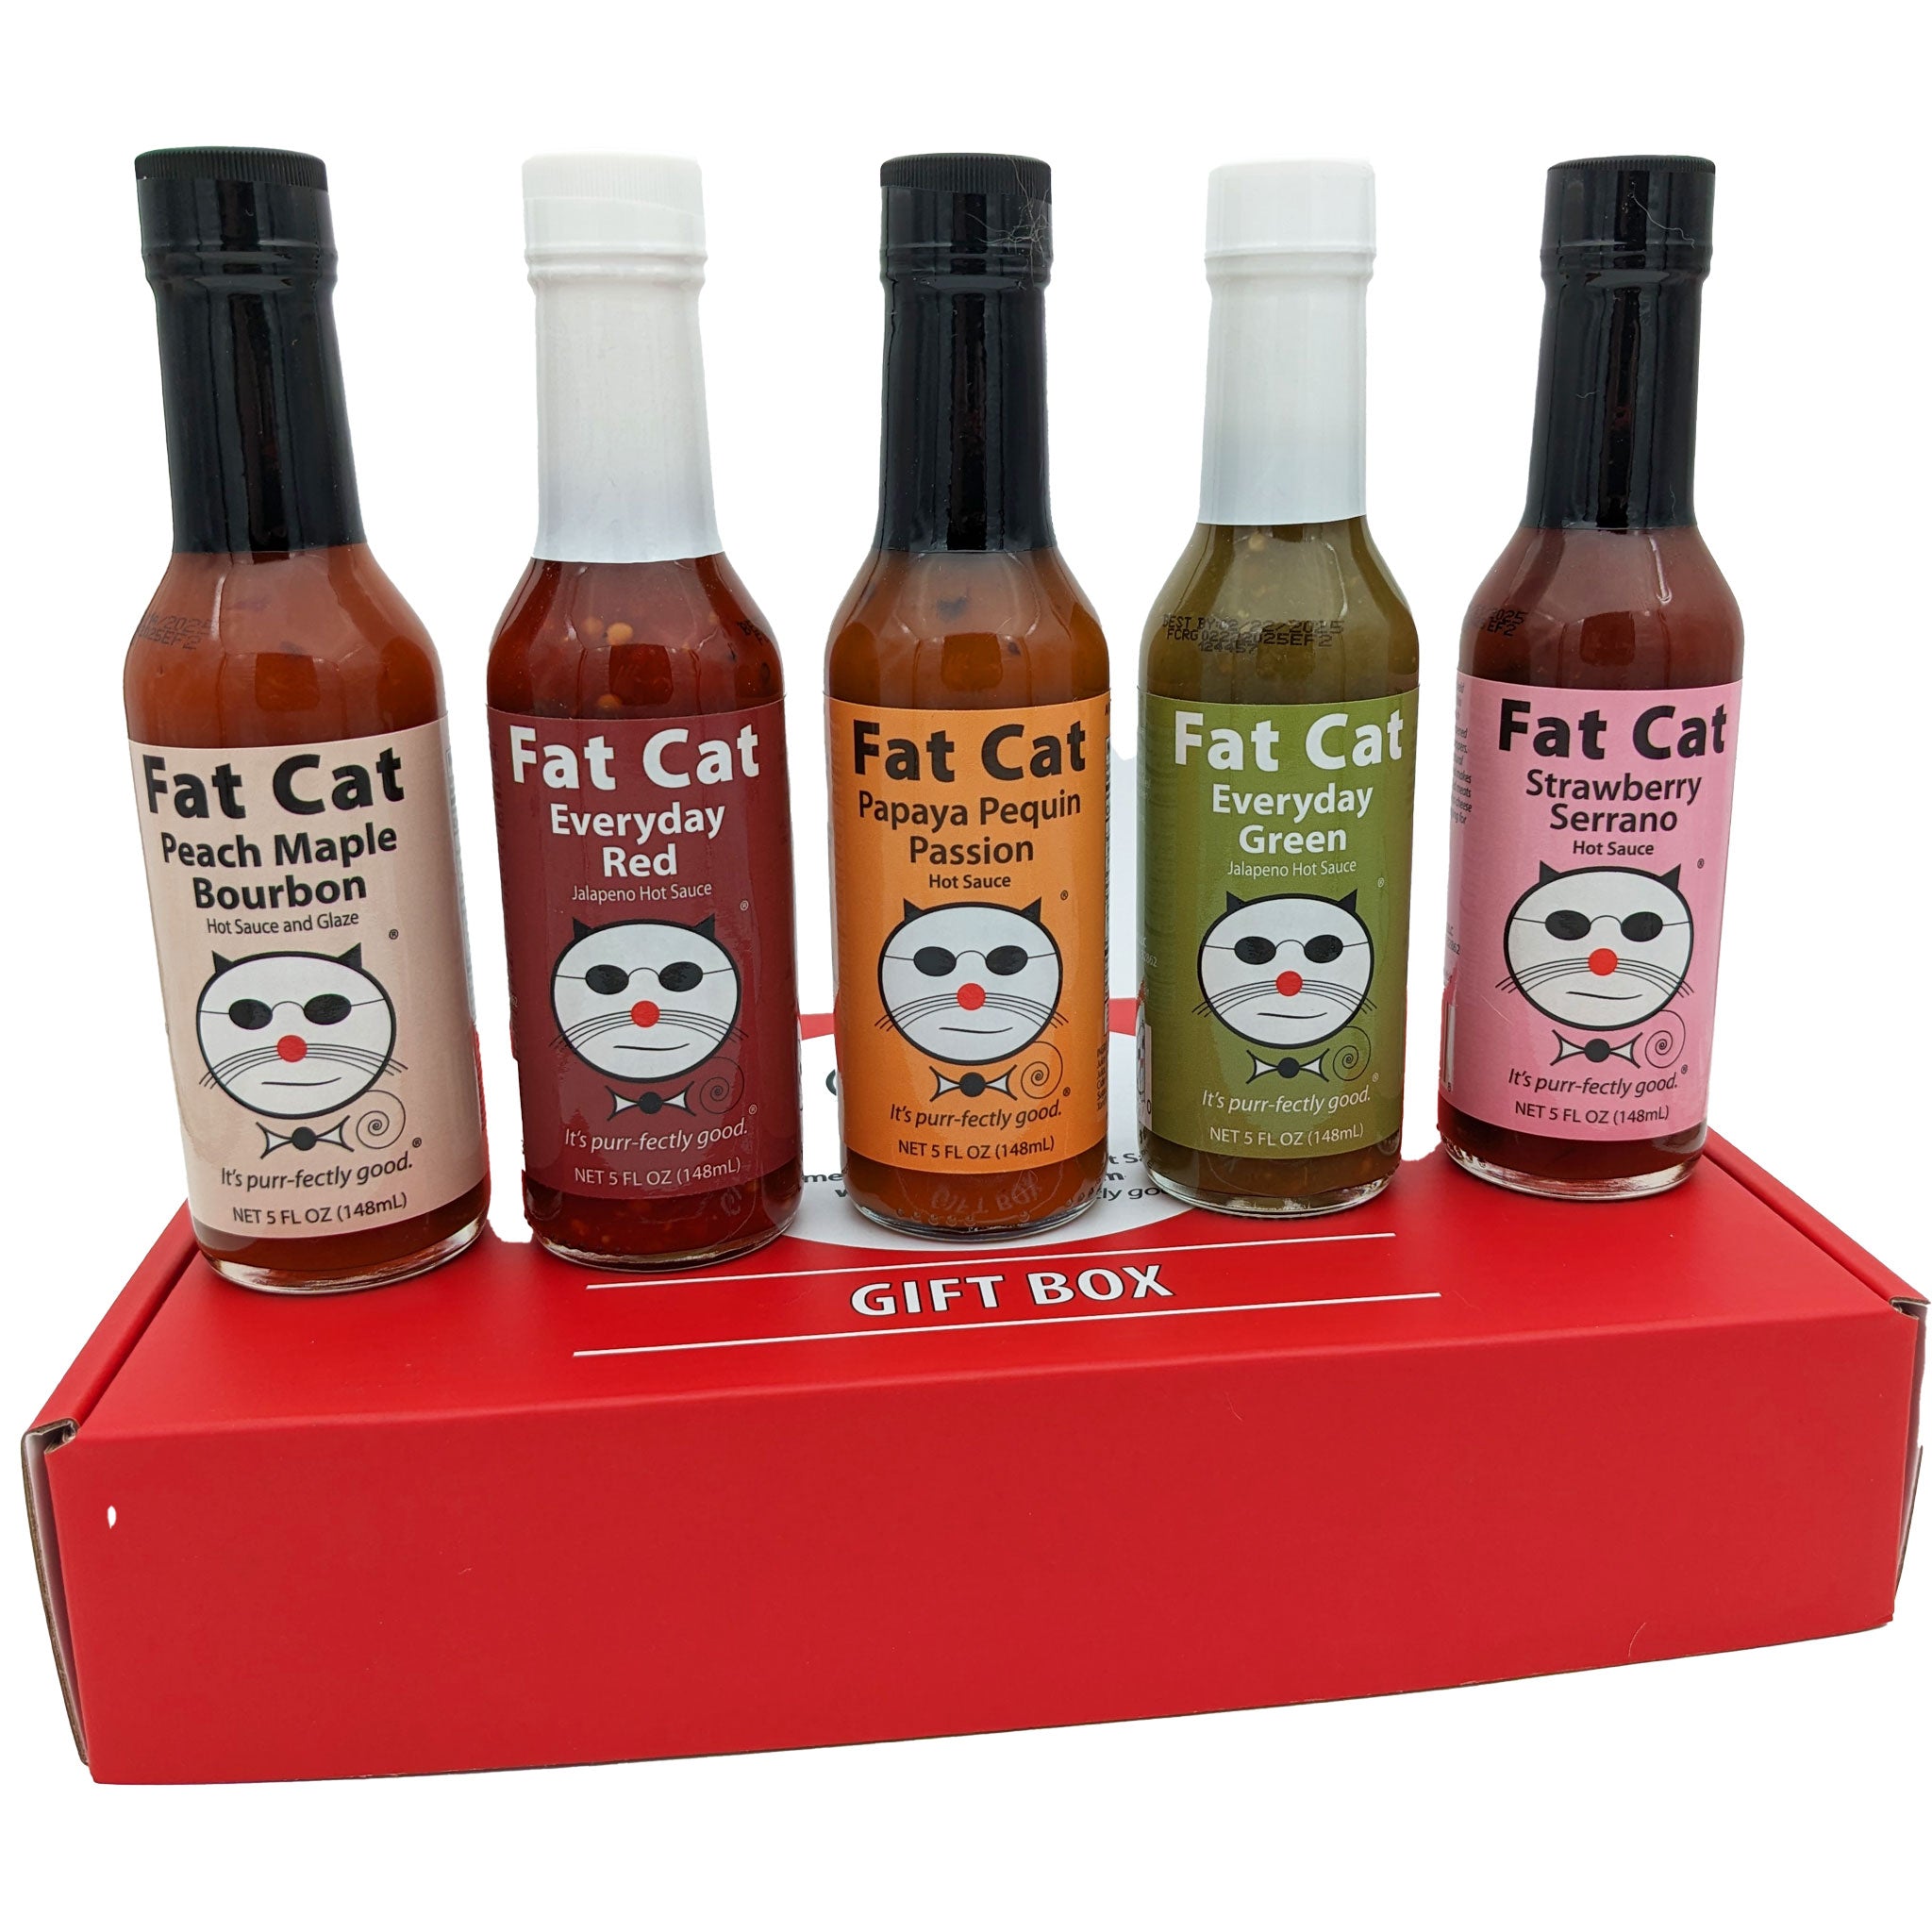 Create Your Own 5-Bottle Hot Sauce Gift Box – Fat Cat Gourmet Hot